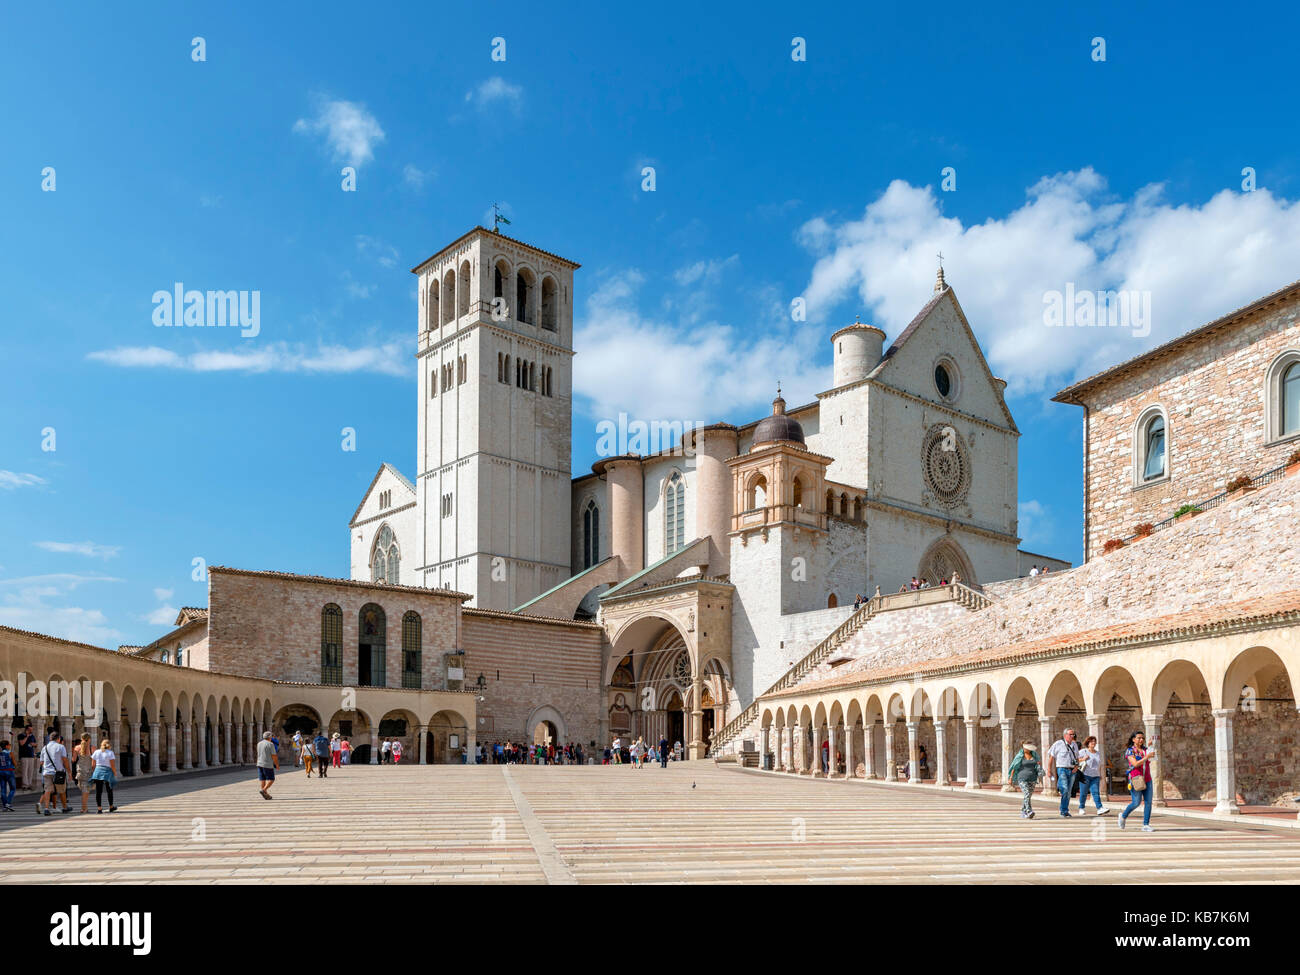 The Basilica di San Francesco (The Basilica of St Francis of Assisi) from the Piazza Inferiore di San Francesco, Assisi, Umbria, Italy Stock Photo